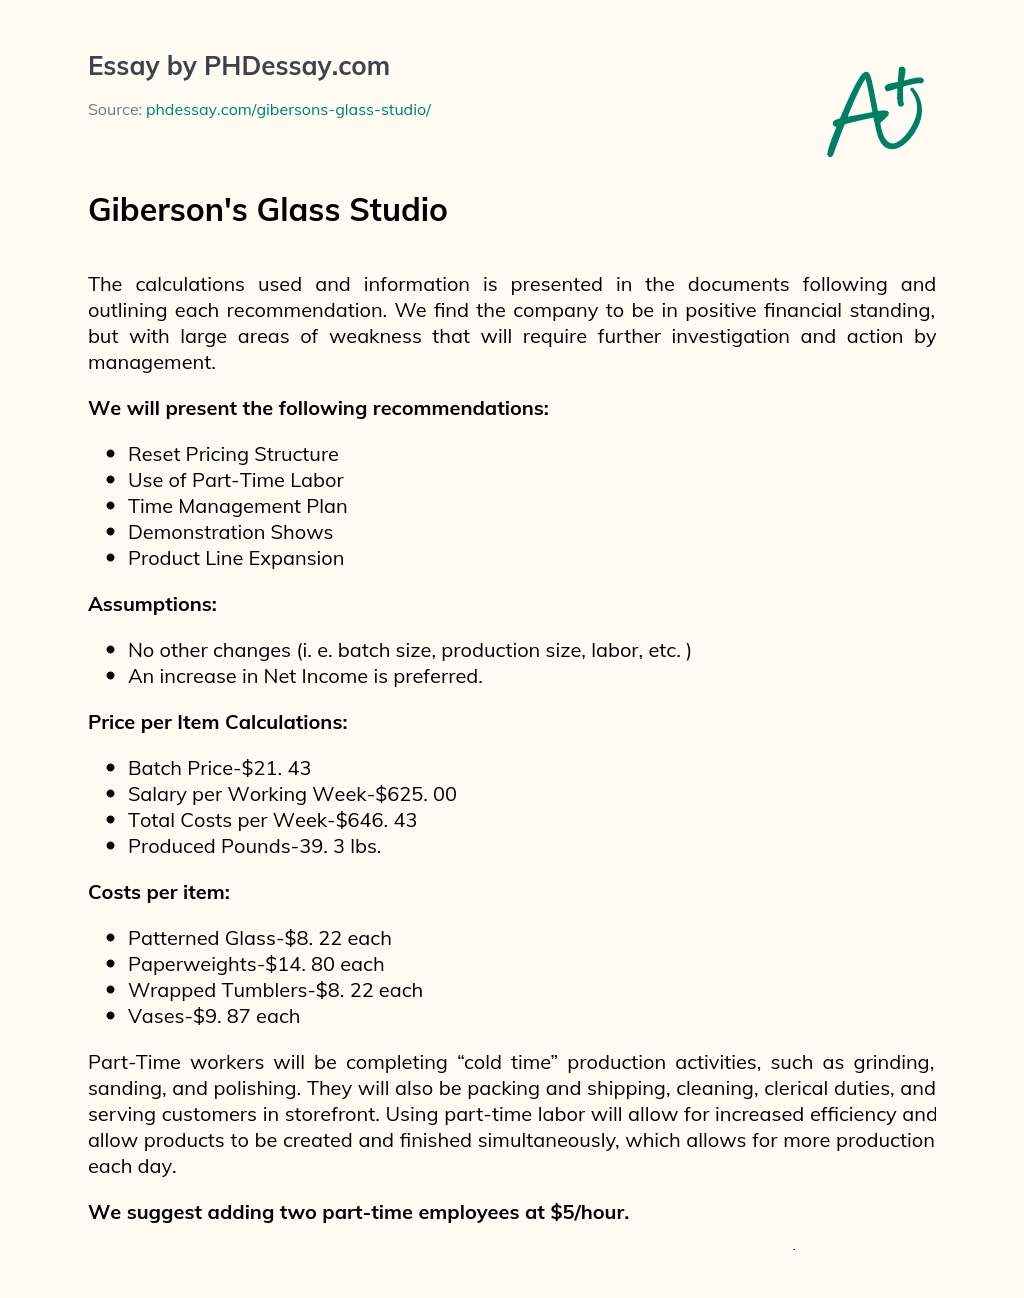 Giberson’s Glass Studio essay